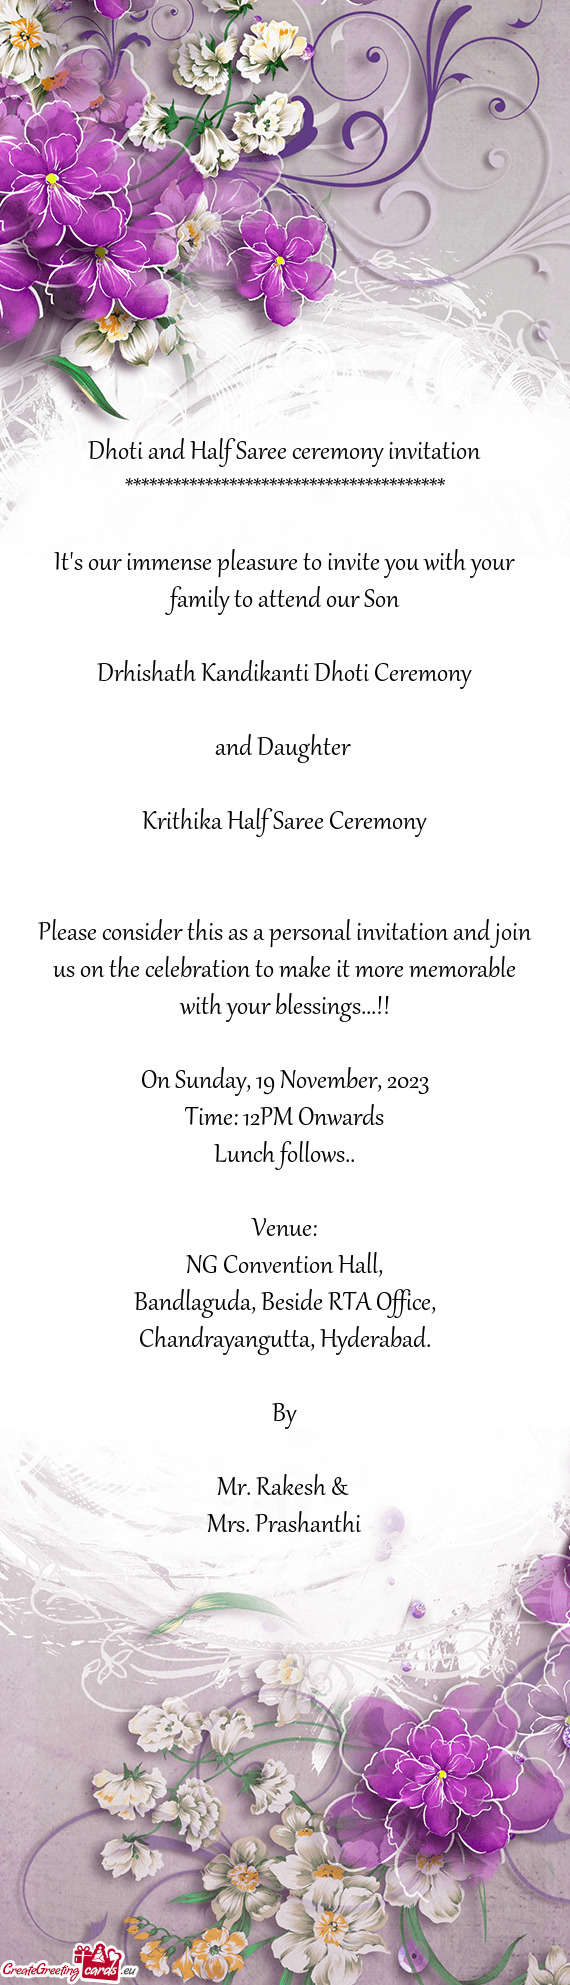 Drhishath Kandikanti Dhoti Ceremony